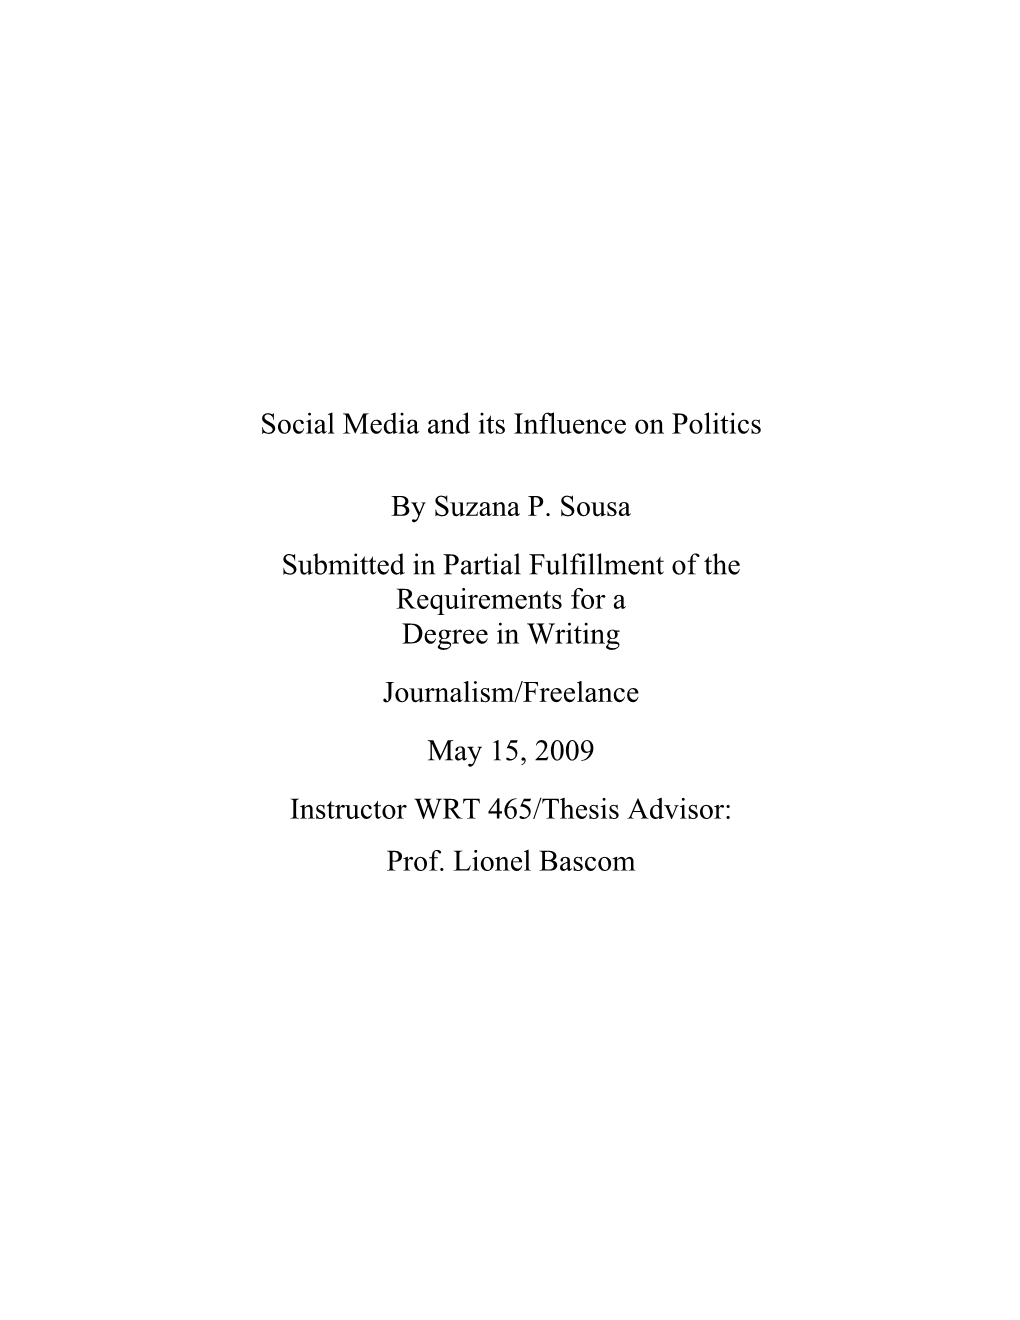 Social Media and Its Influence on Politics by Suzana P. Sousa